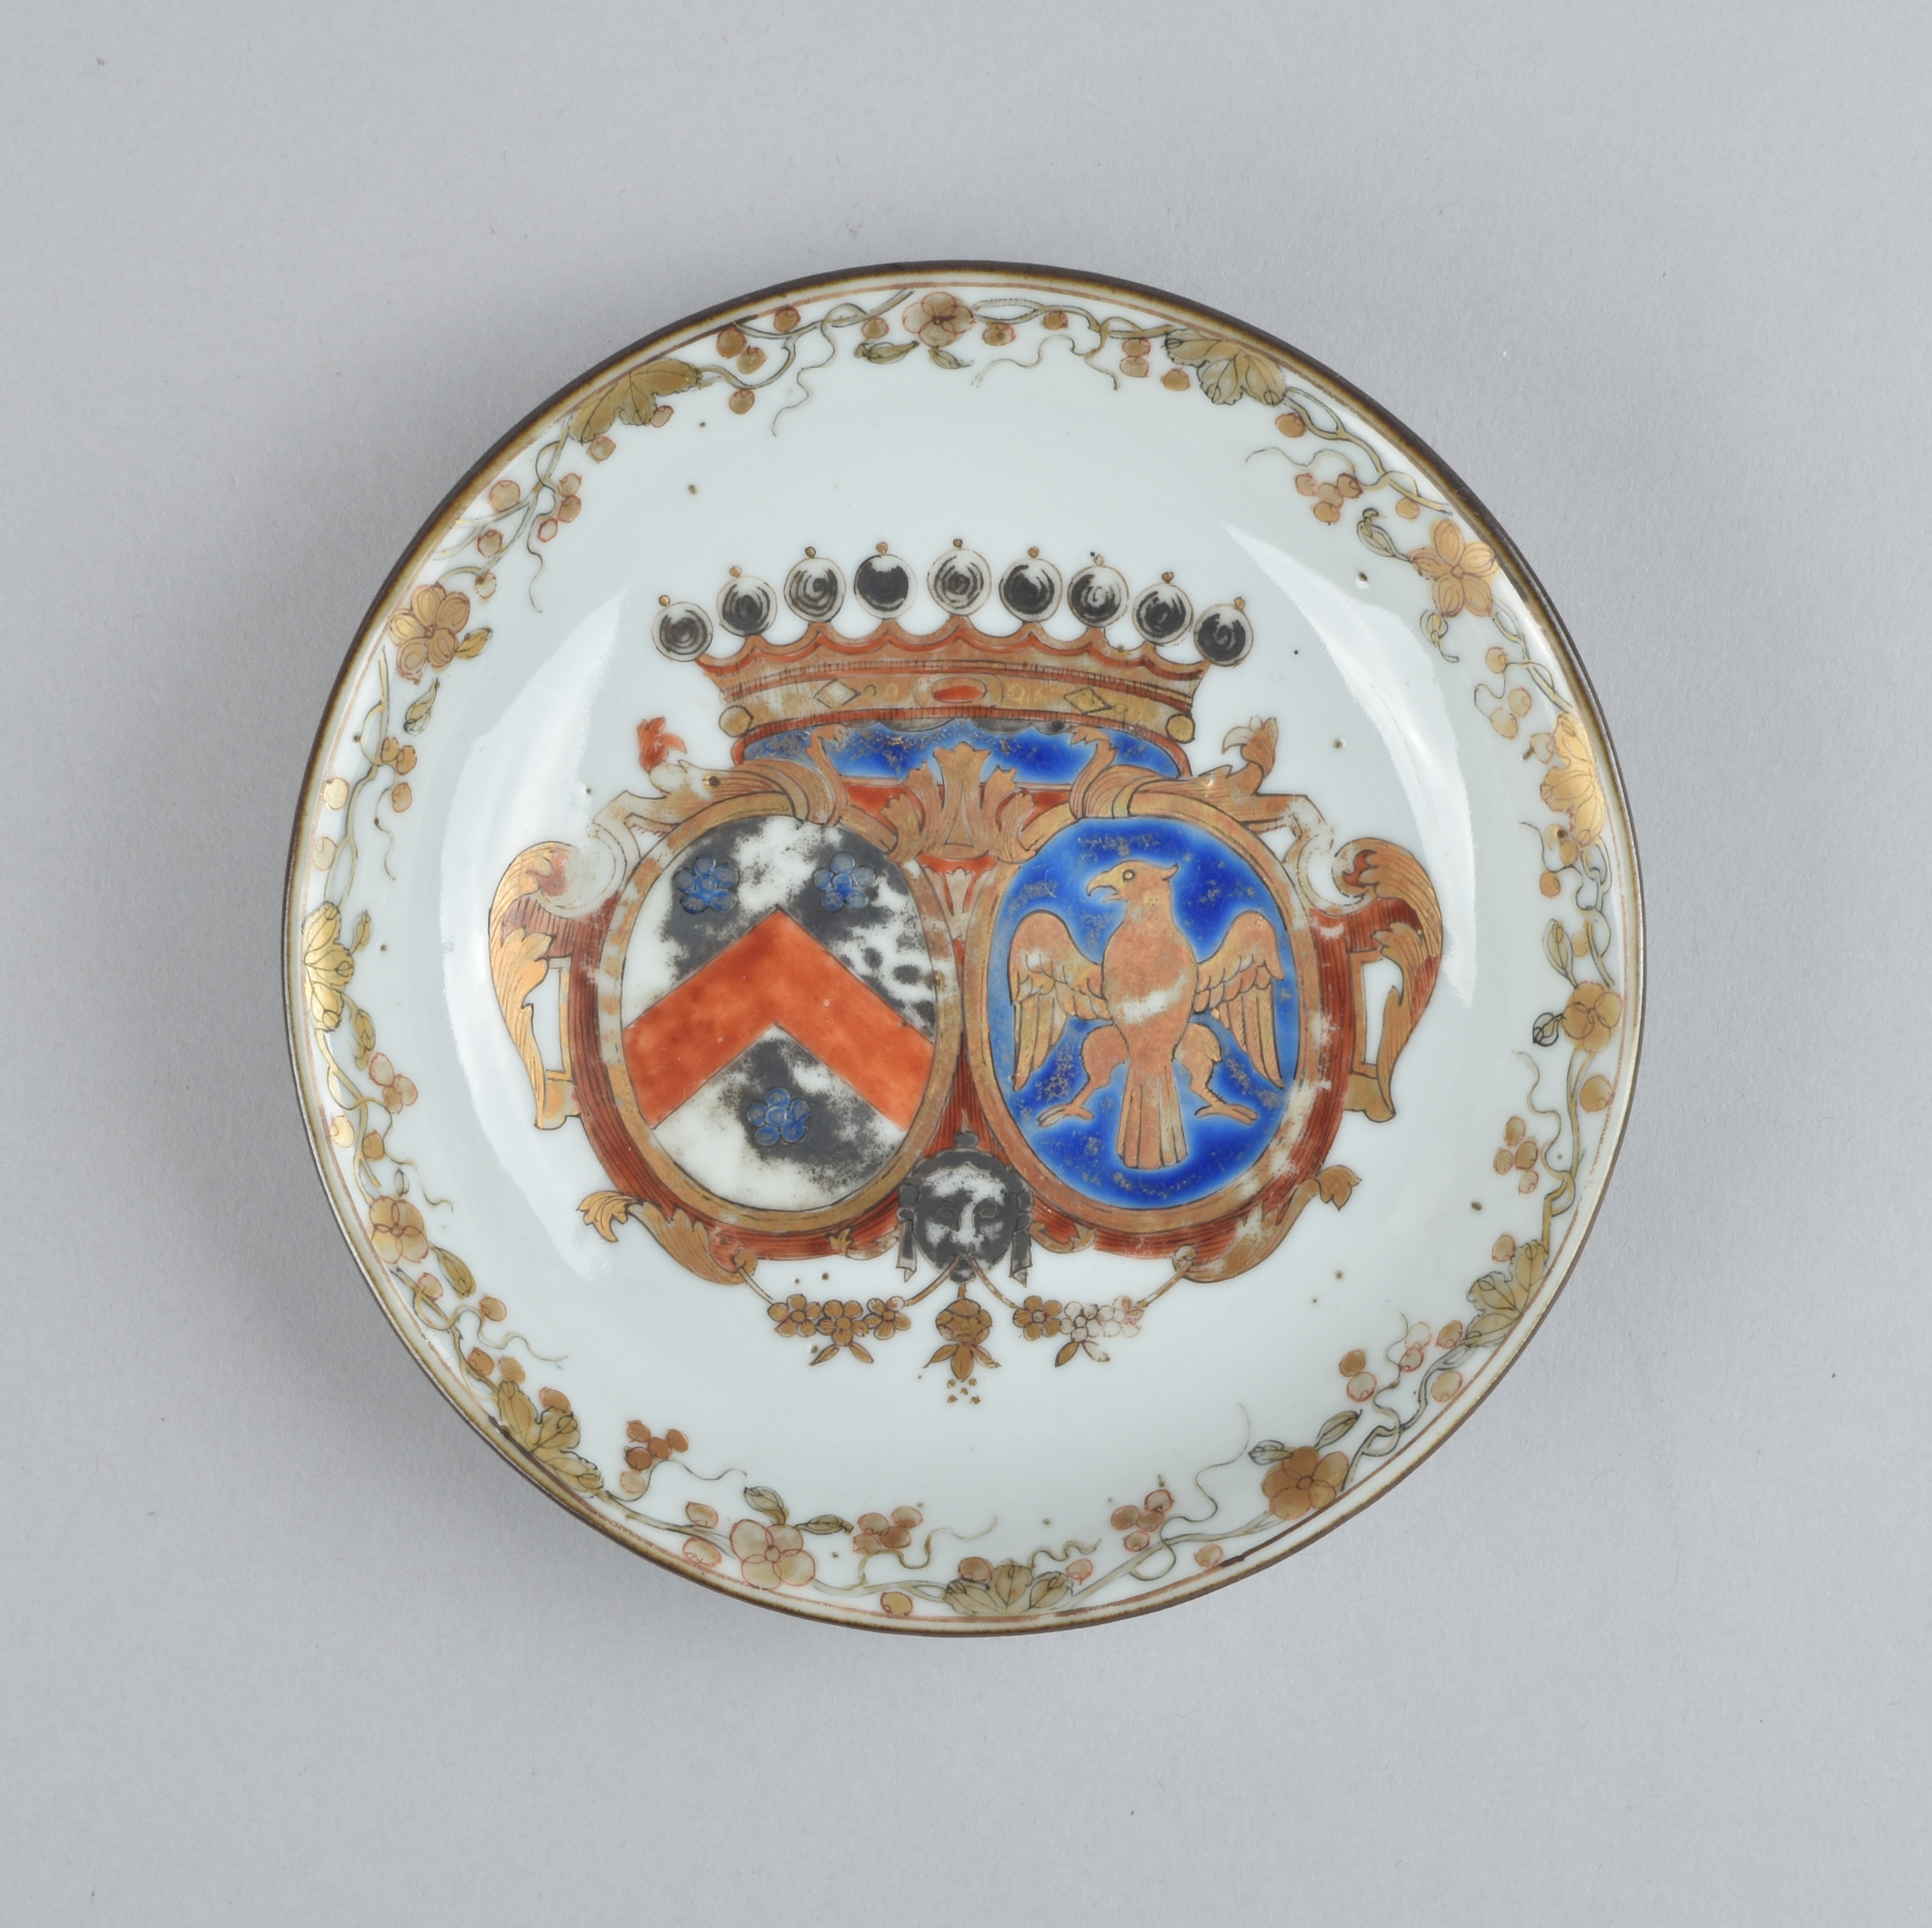 Porcelaine Qianlong (173§-1795), ca. 1740, Chine